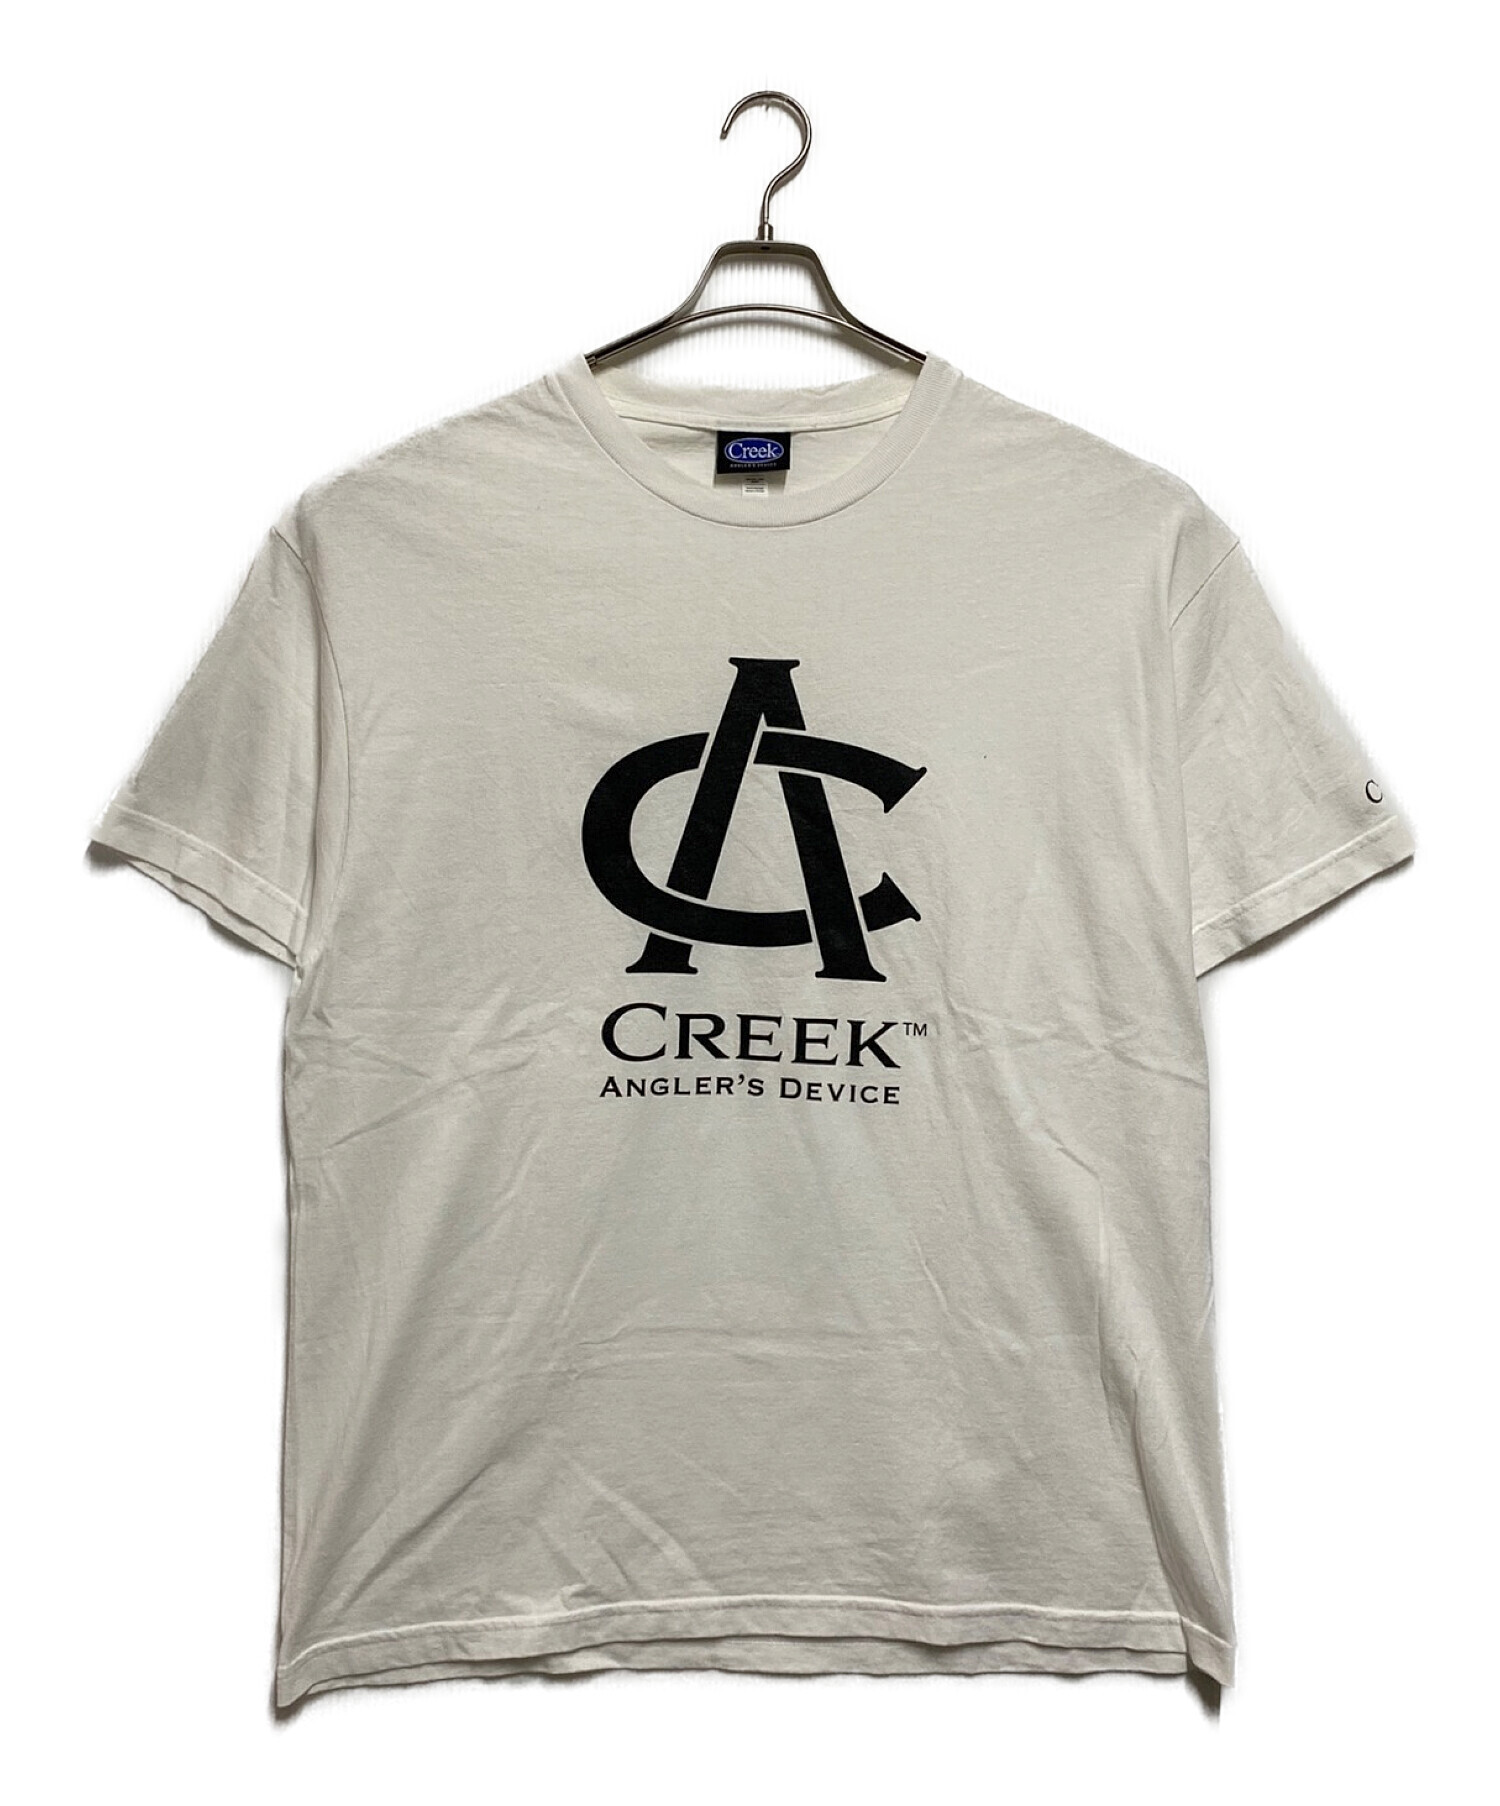 Creek Angler's Device Logo tシャツ XLサイズ - Tシャツ/カットソー